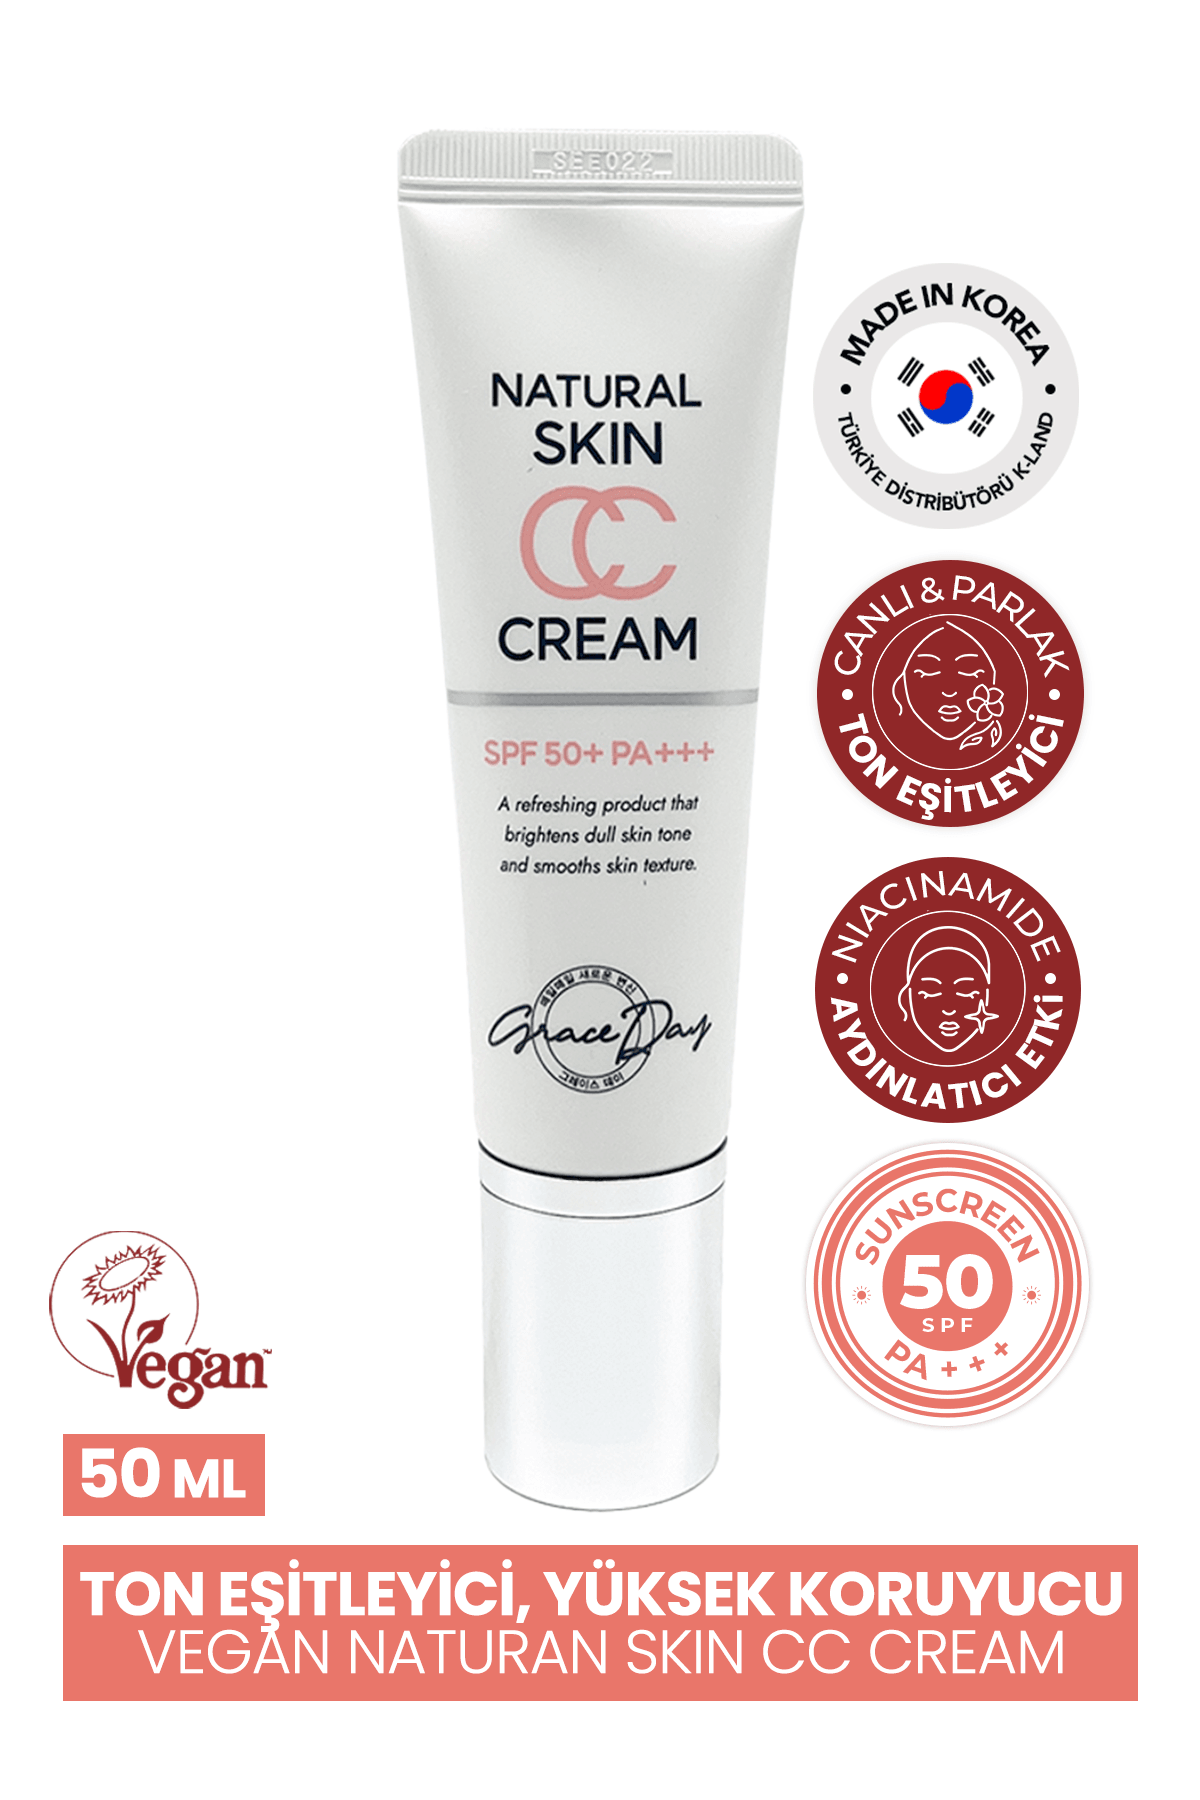 Ton Eşitleyici Vegan CC Krem SPF 50+ PA+++ GRACE DAY Natural Skin CC Cream